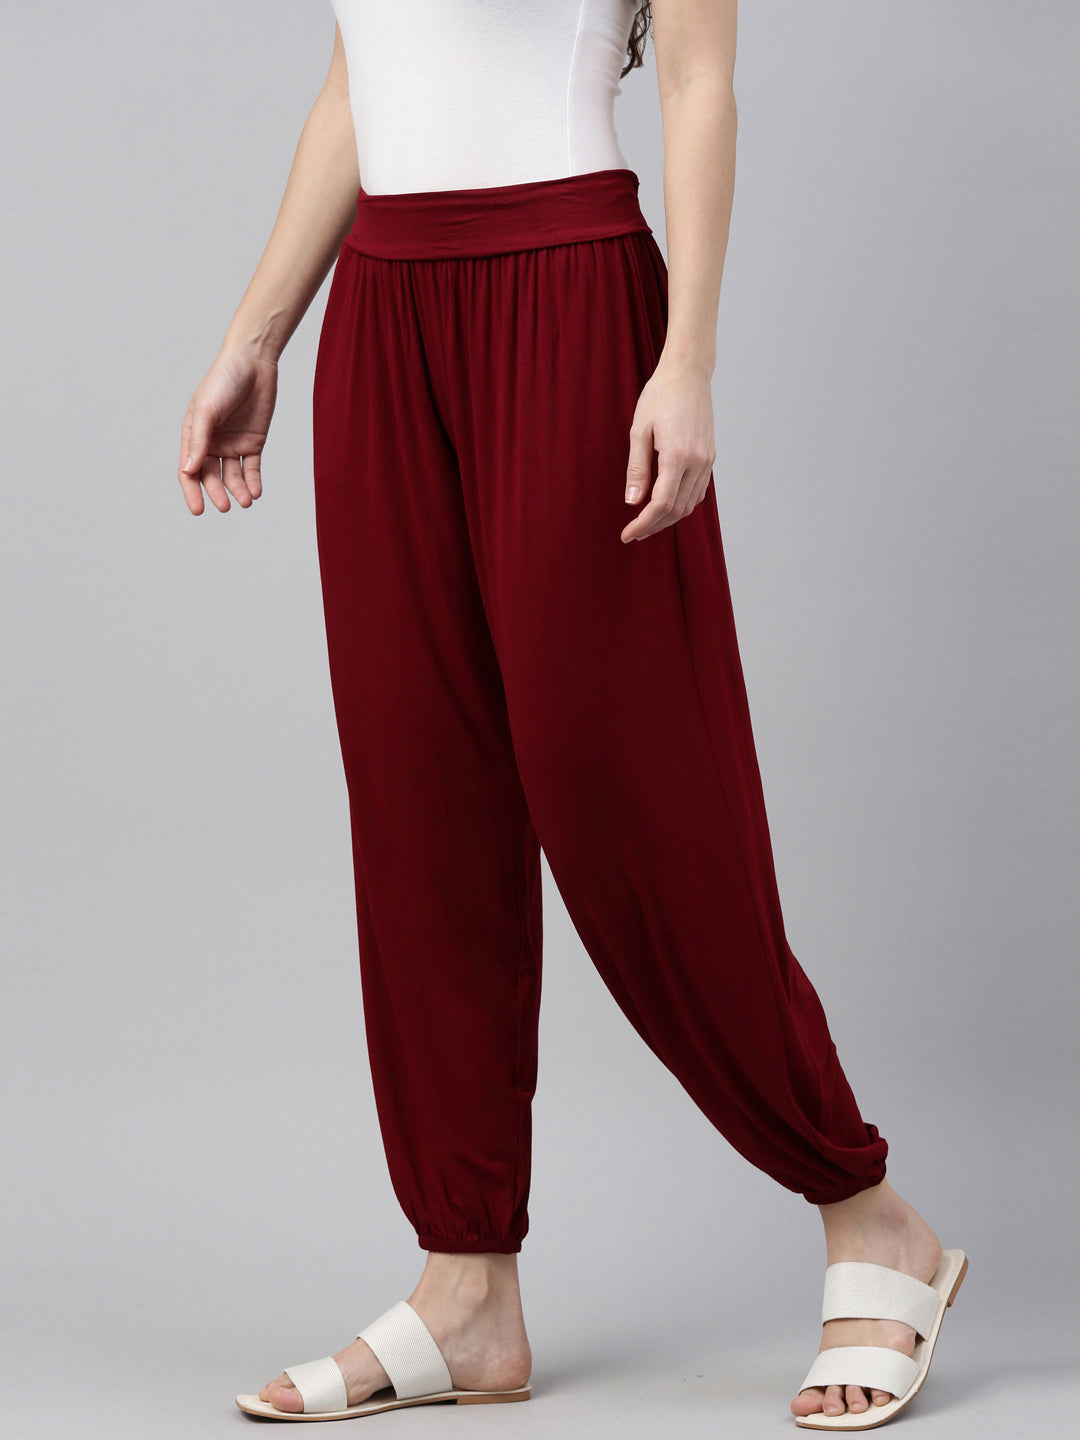 Buy Men Women Cotton Summer Loose Baggy Hippie Boho Gypsy Harem Pants Plus  Size Multicolour 10XL at Amazonin